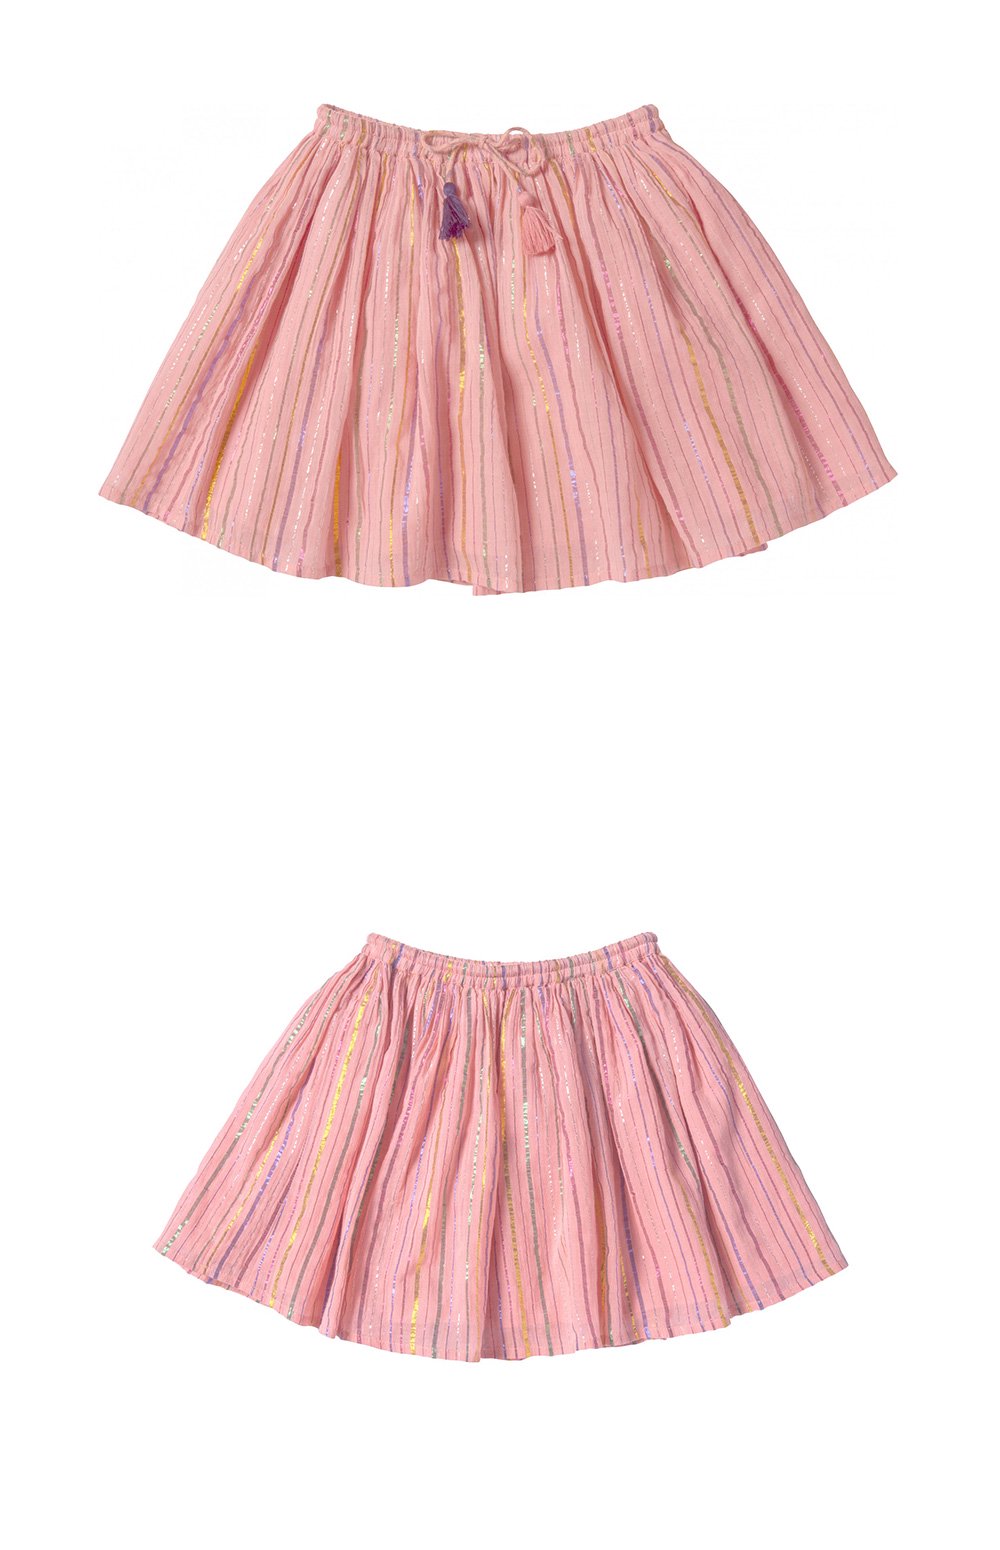 bonheur de jourボヌールドゥジュール フランス子供服キッズ服 140cm 150cmサイズ スカート